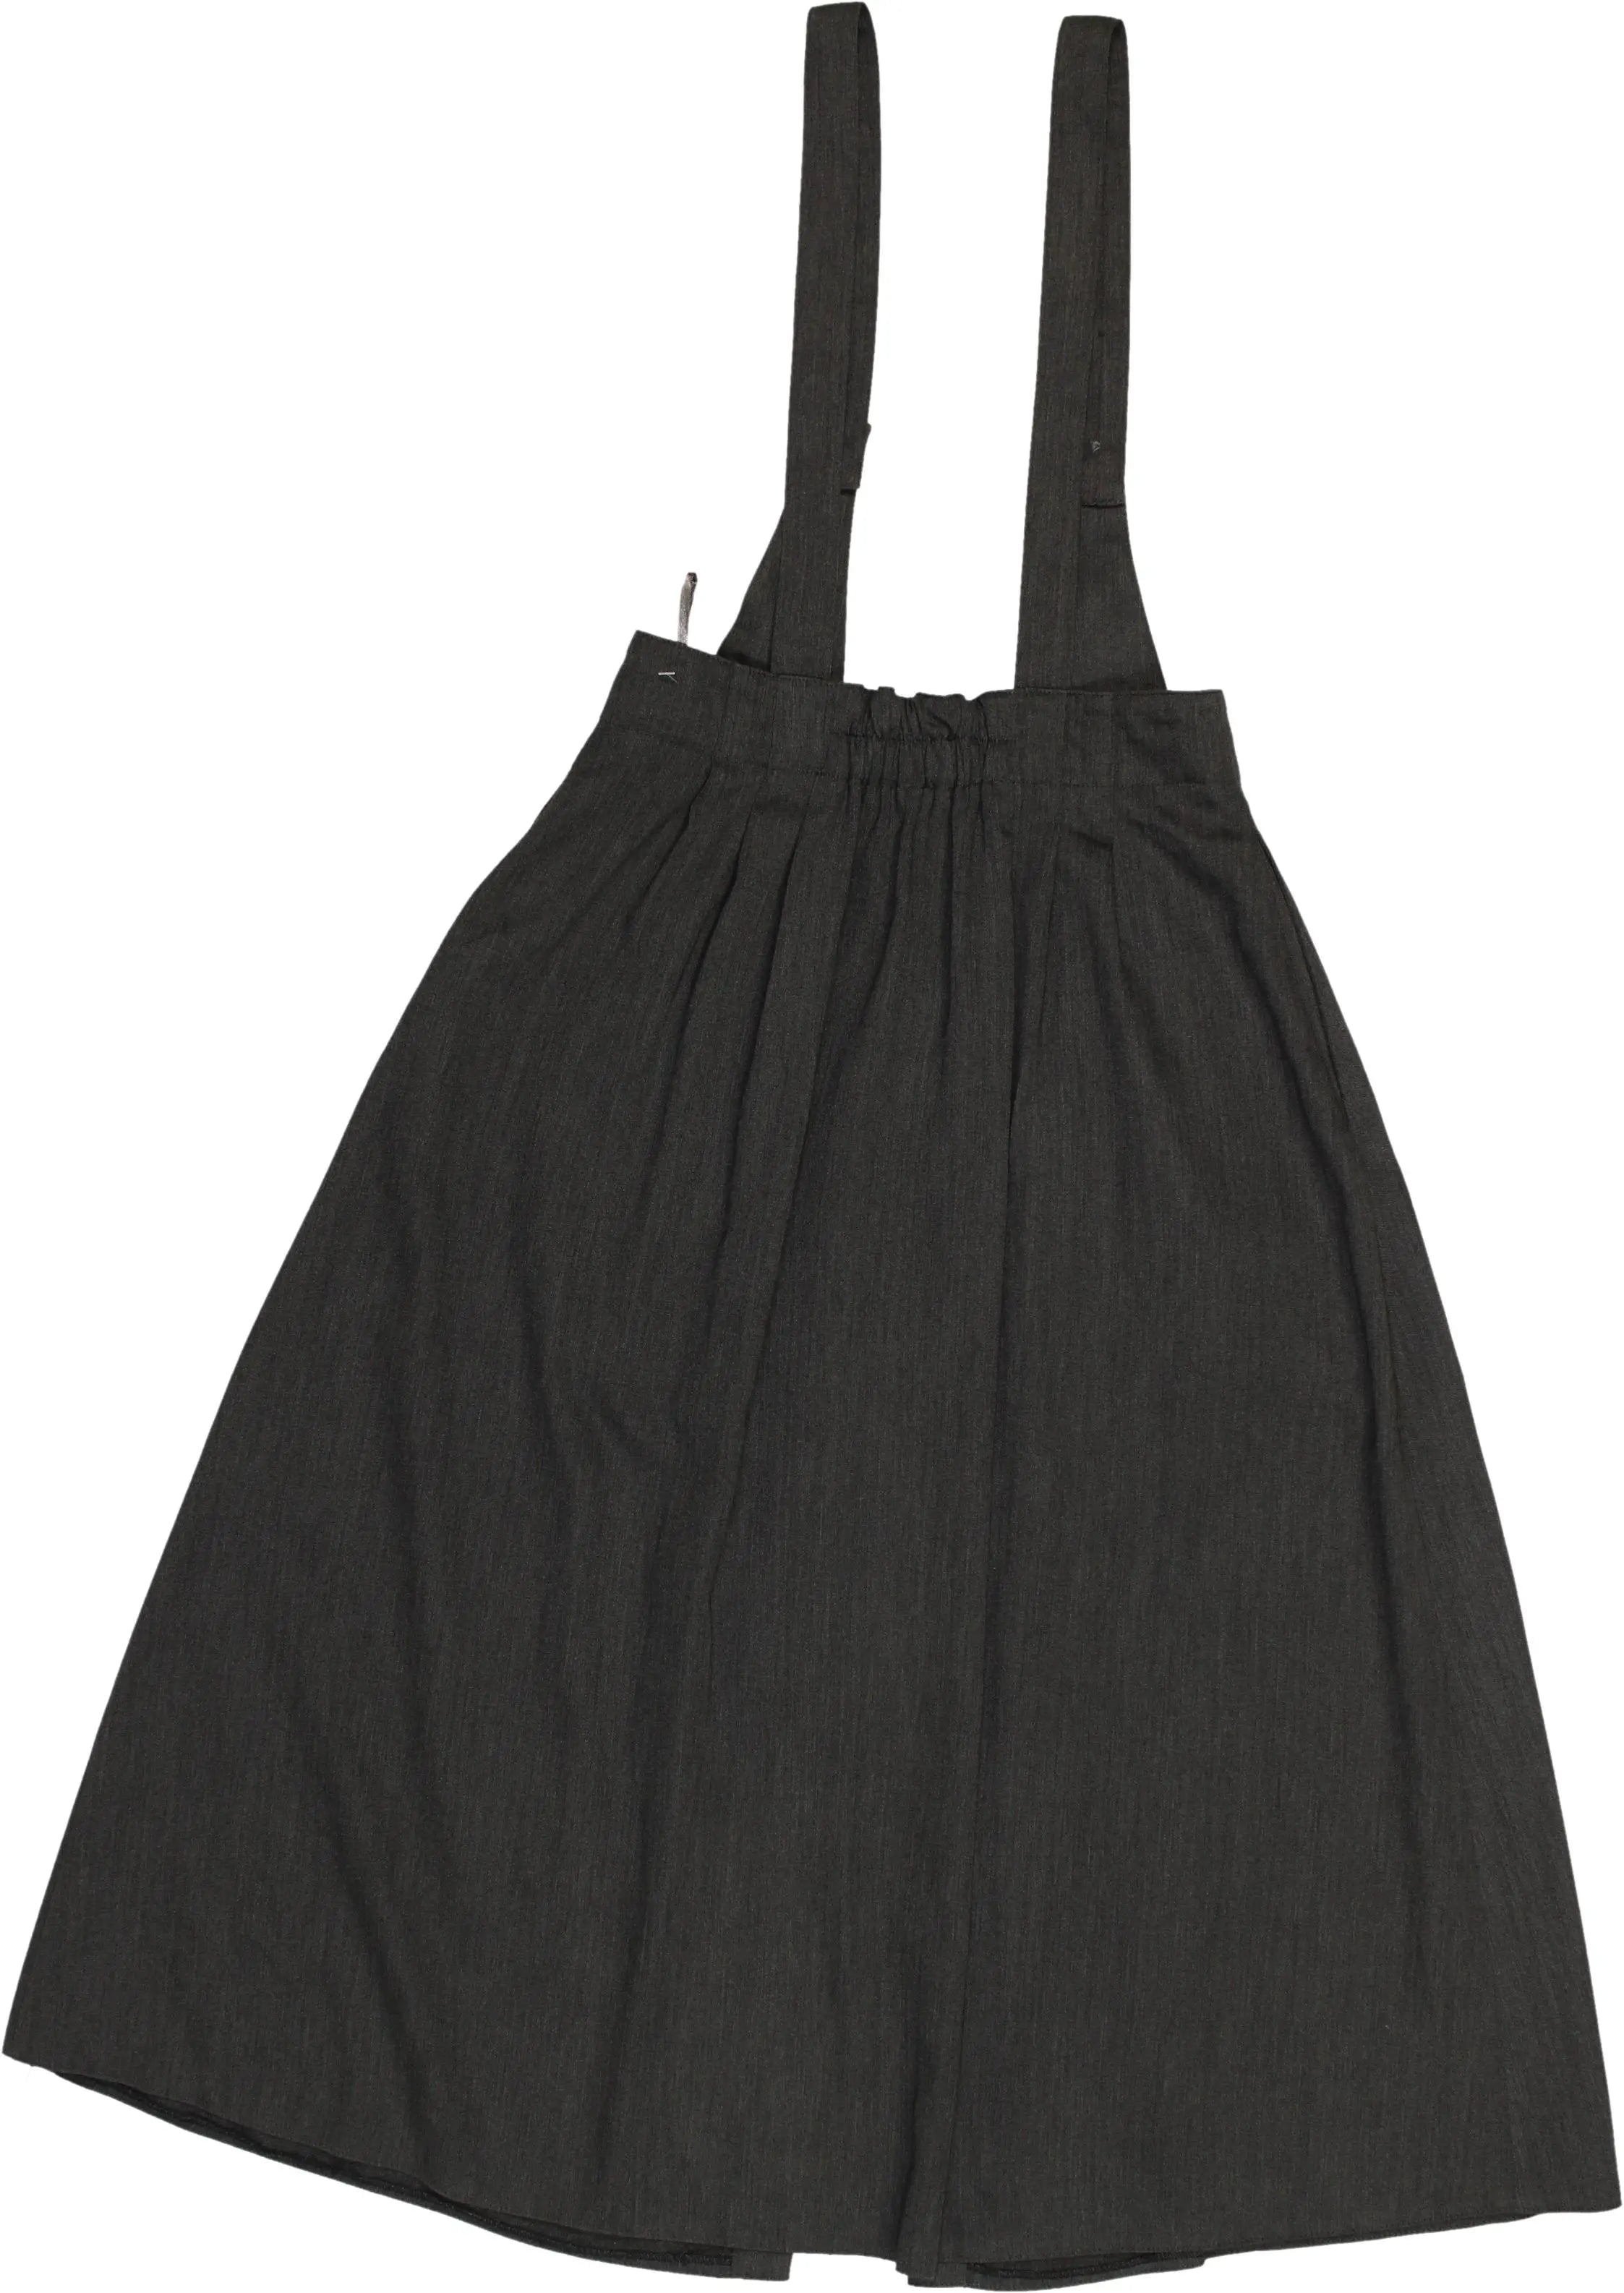 La Via - 90s Pinafore Dress- ThriftTale.com - Vintage and second handclothing